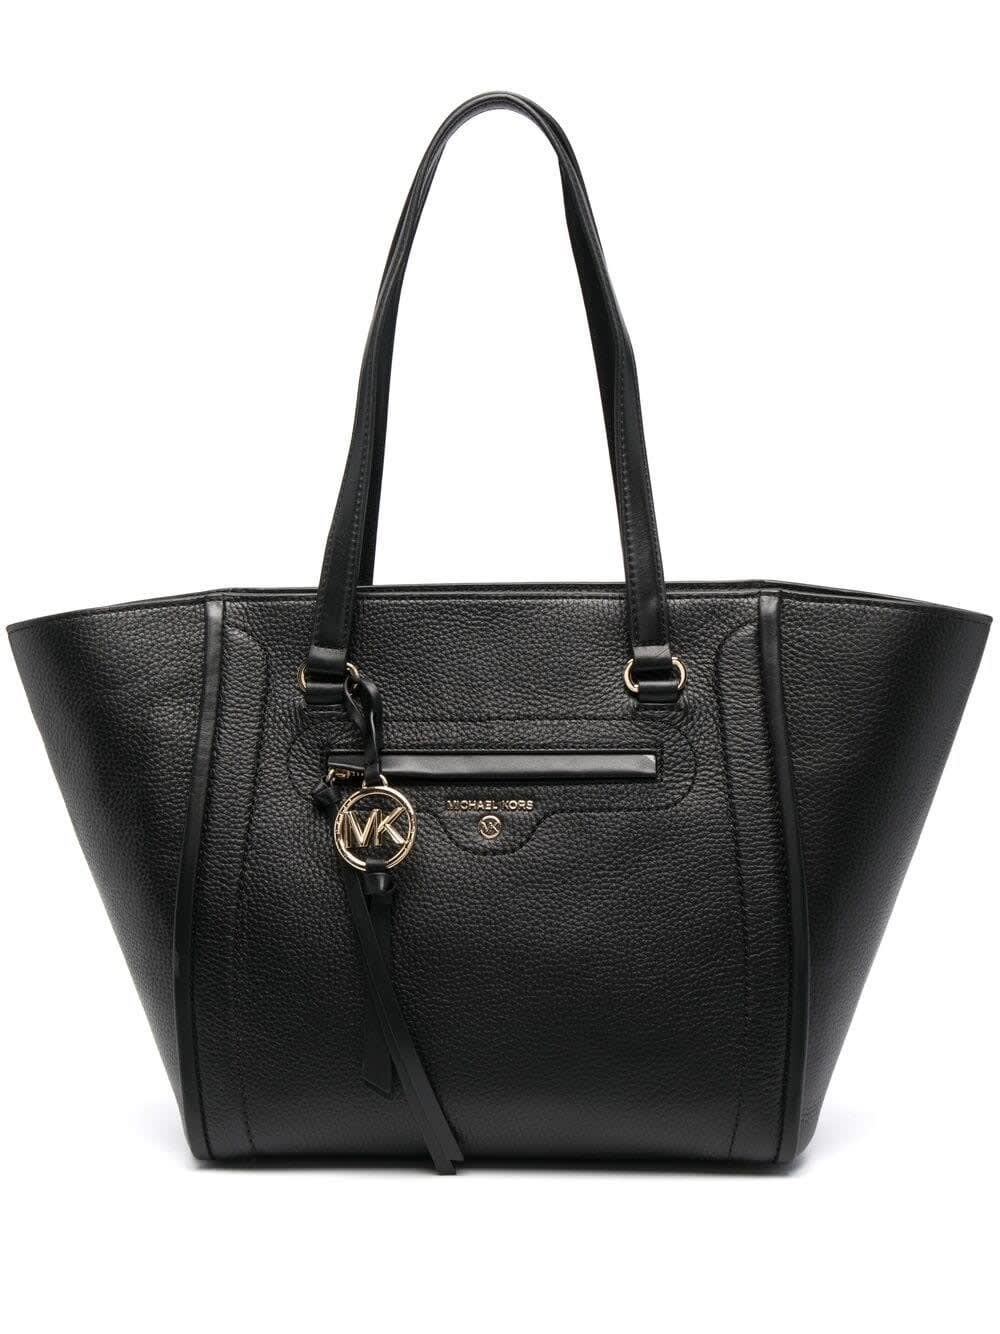 MICHAEL Michael Kors Carine Tote Handbag In Black Leather